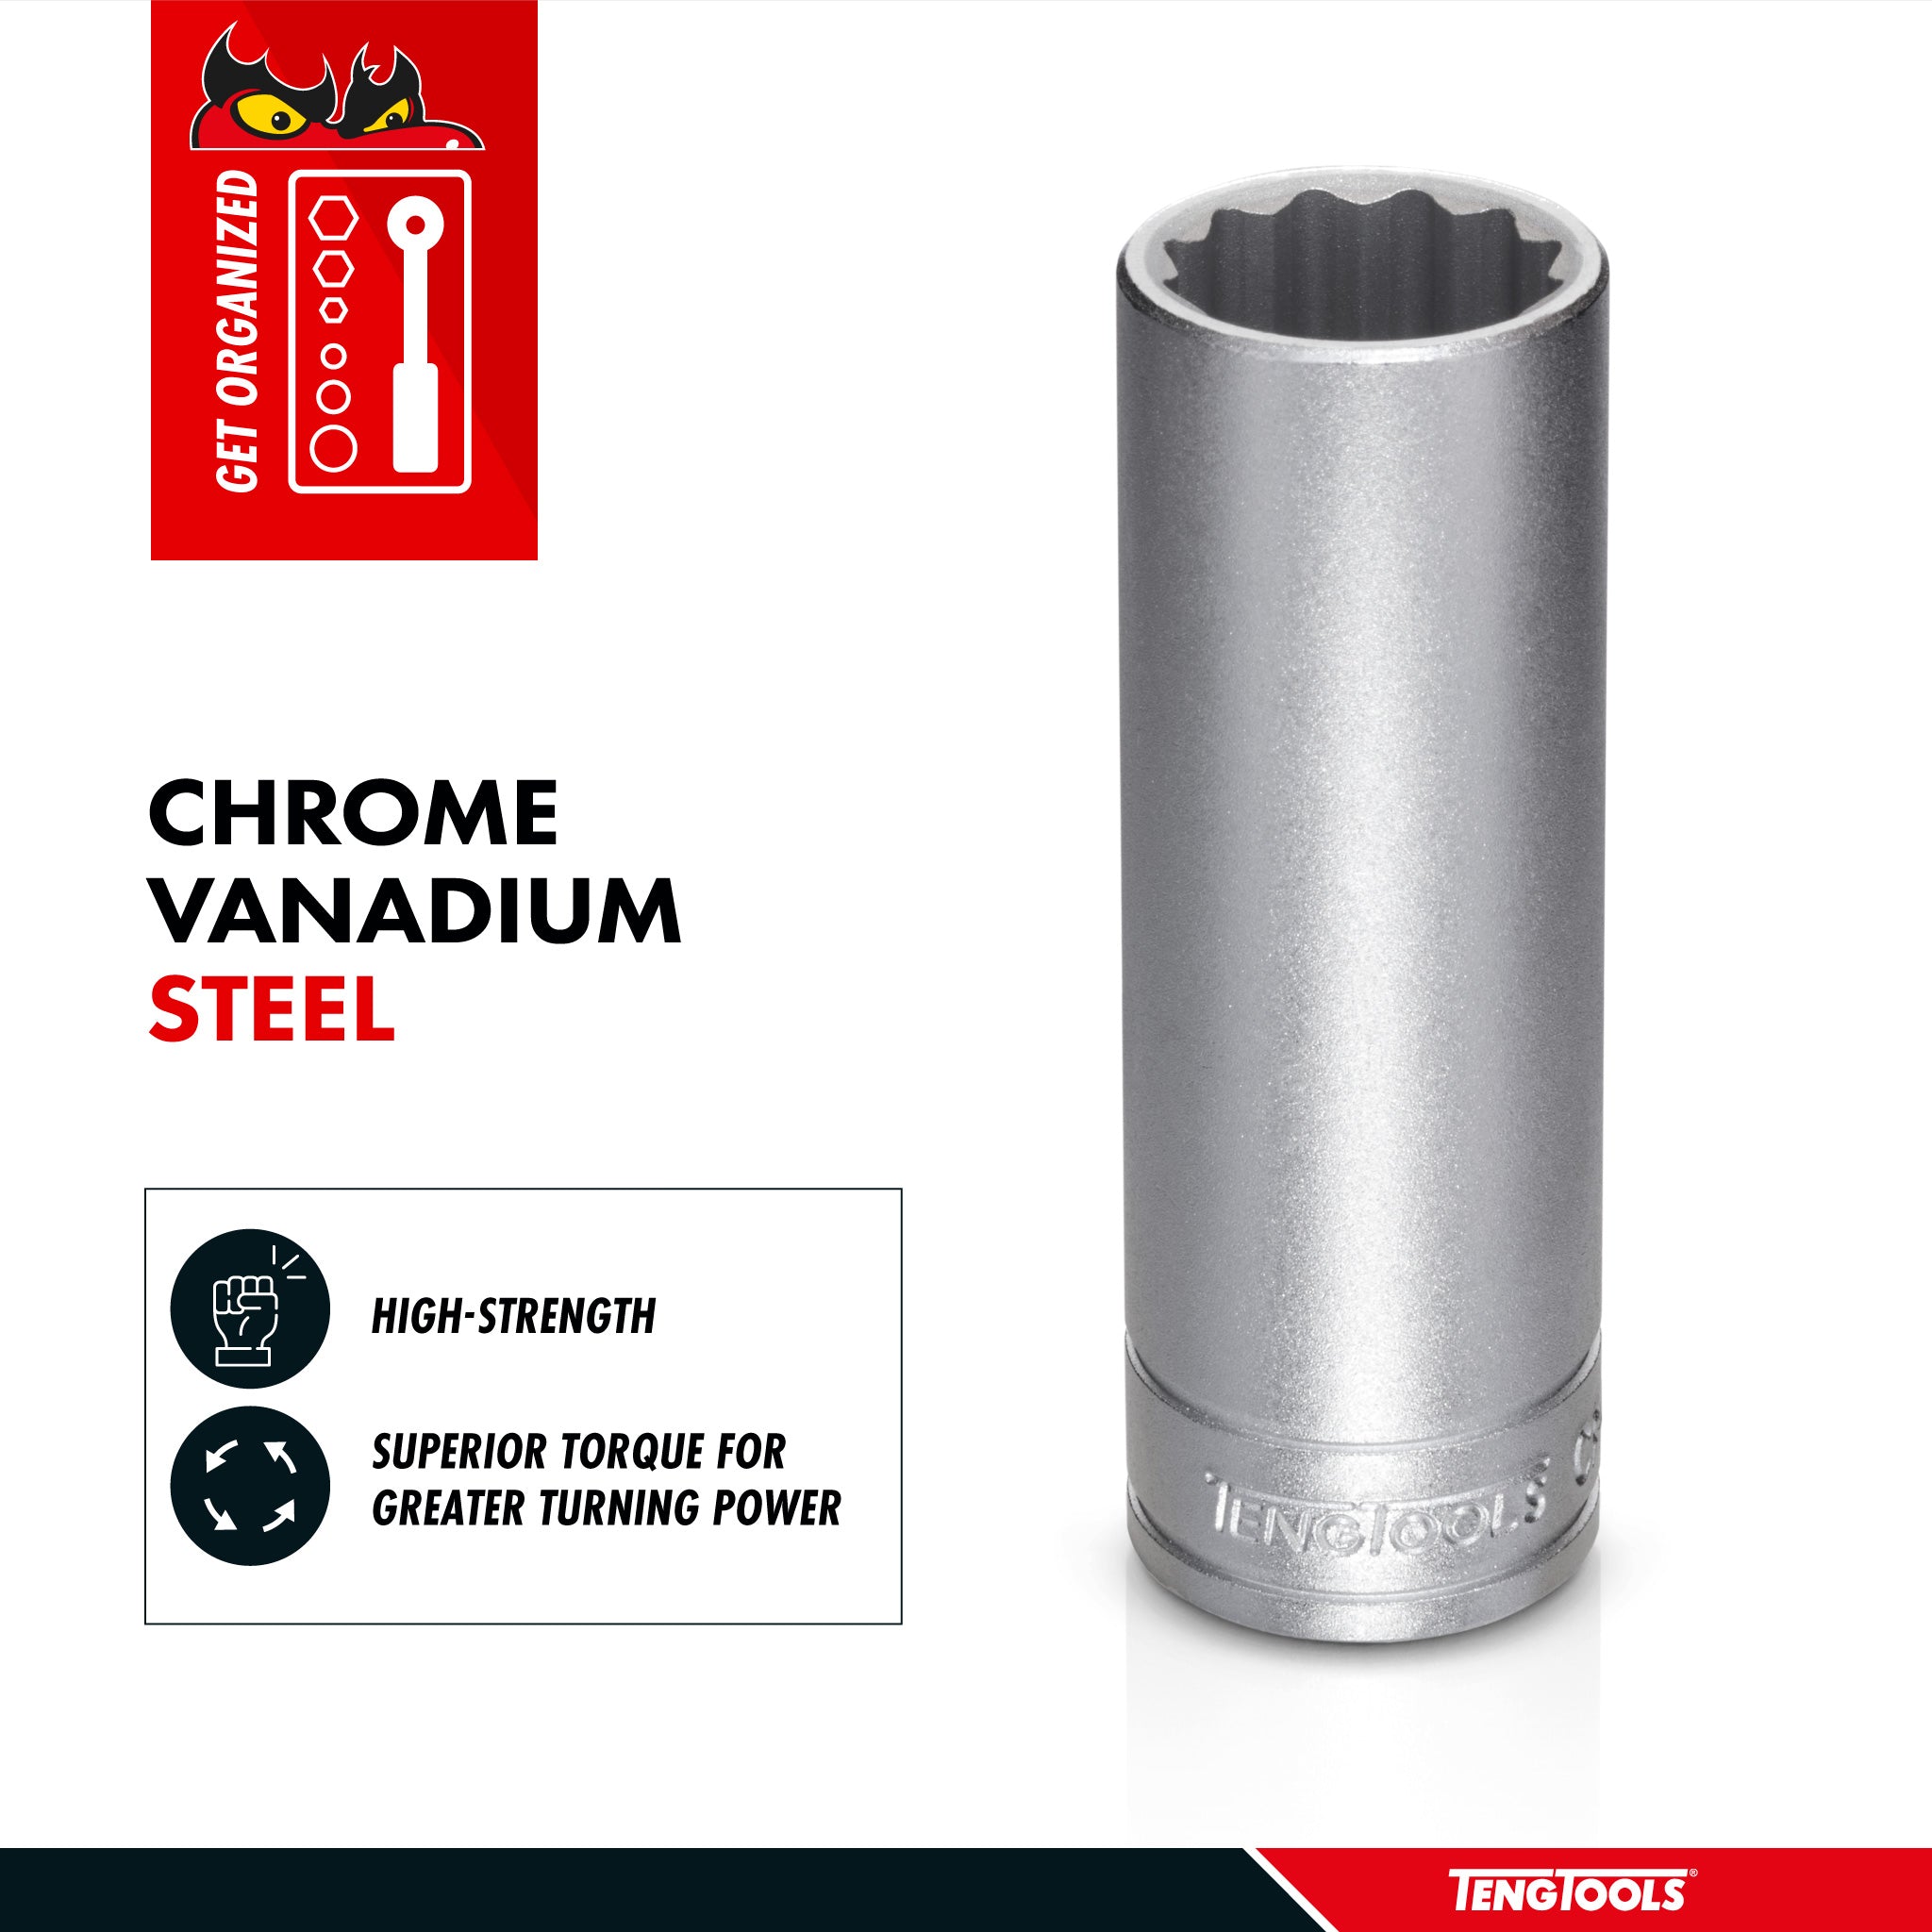 Teng Tools 1/2 Inch Drive 12 Point Metric Deep Chrome Vanadium Sockets - 12mm